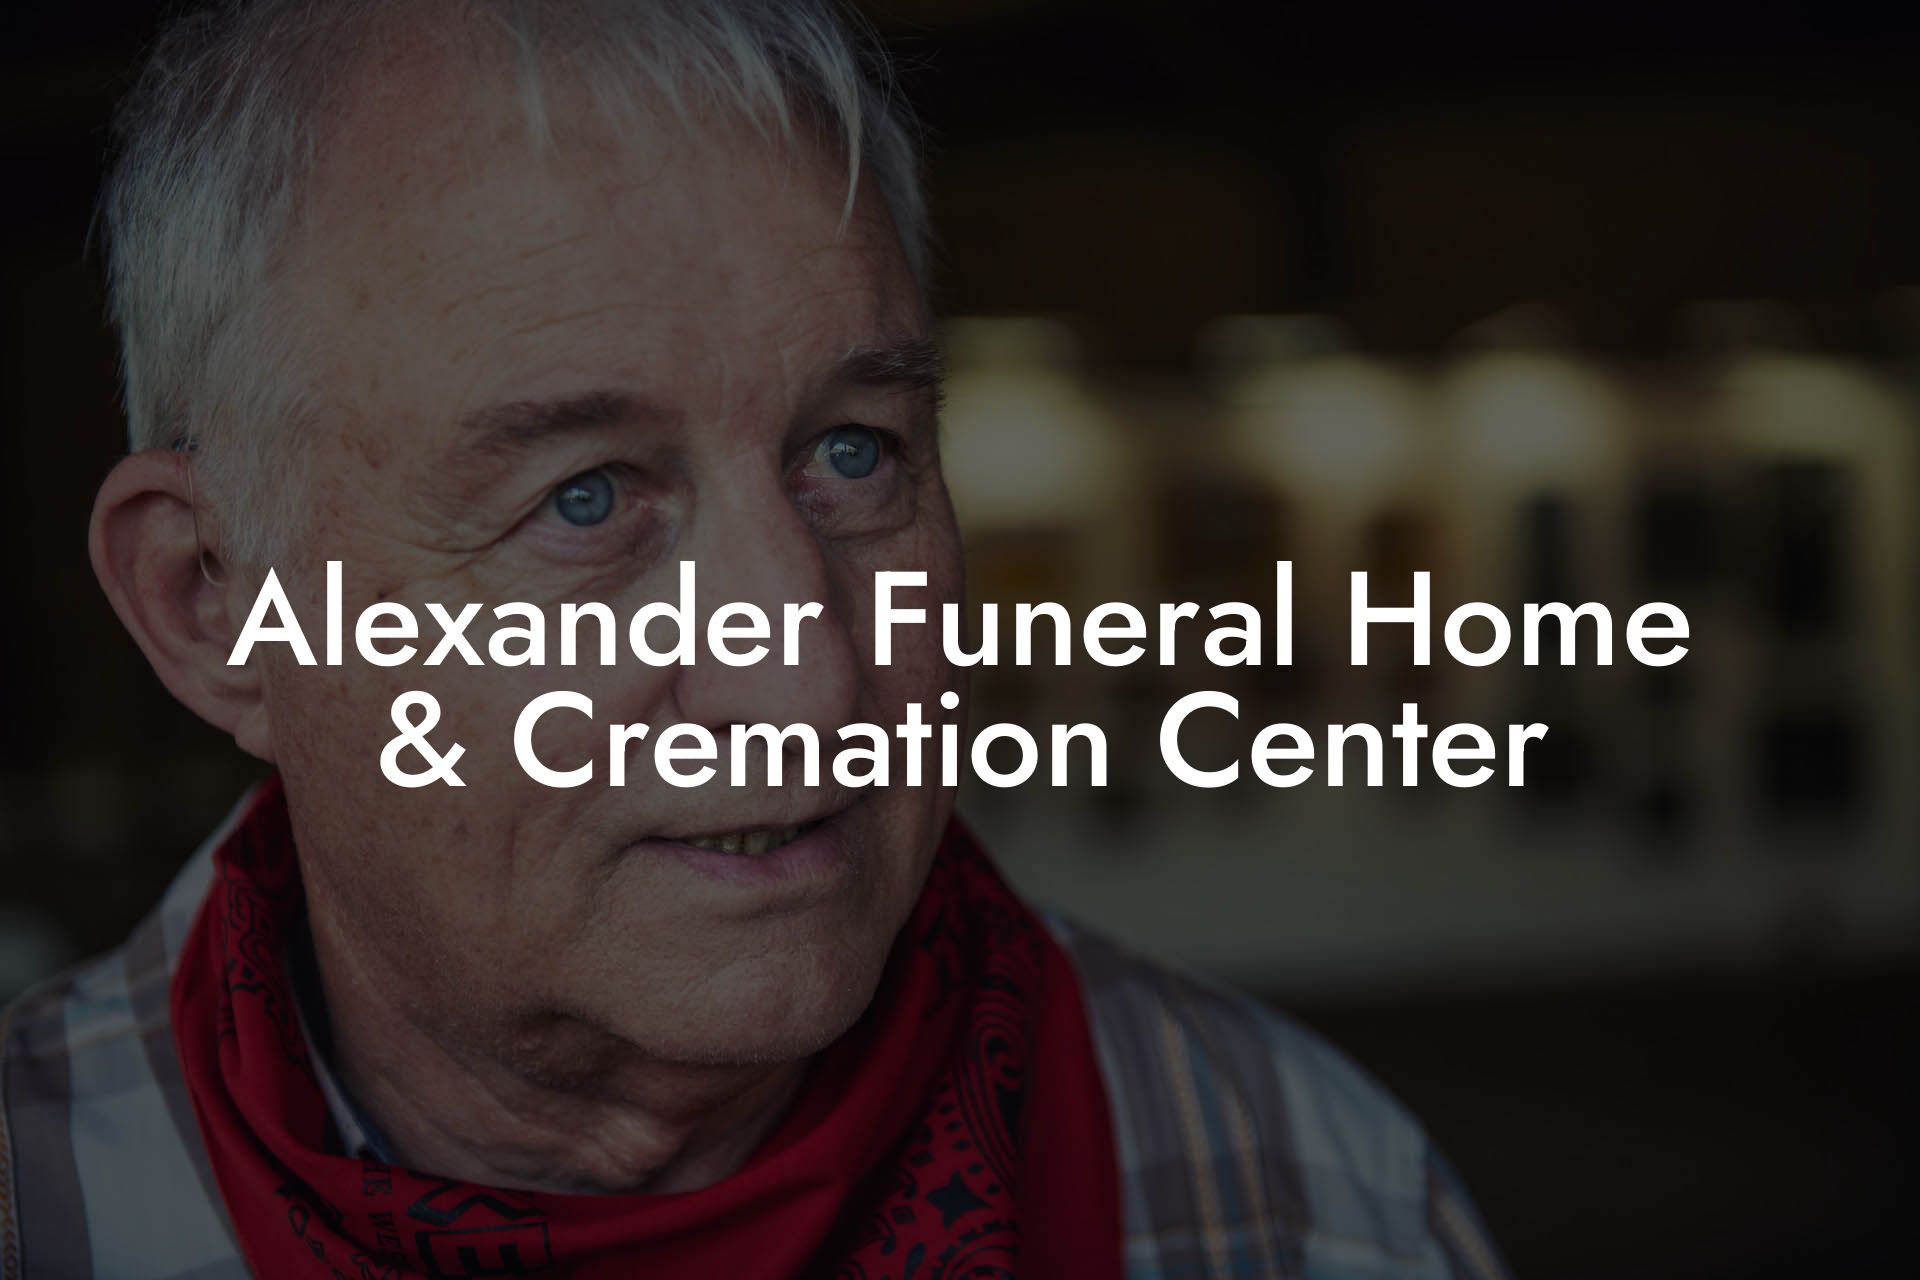 Alexander Funeral Home & Cremation Center